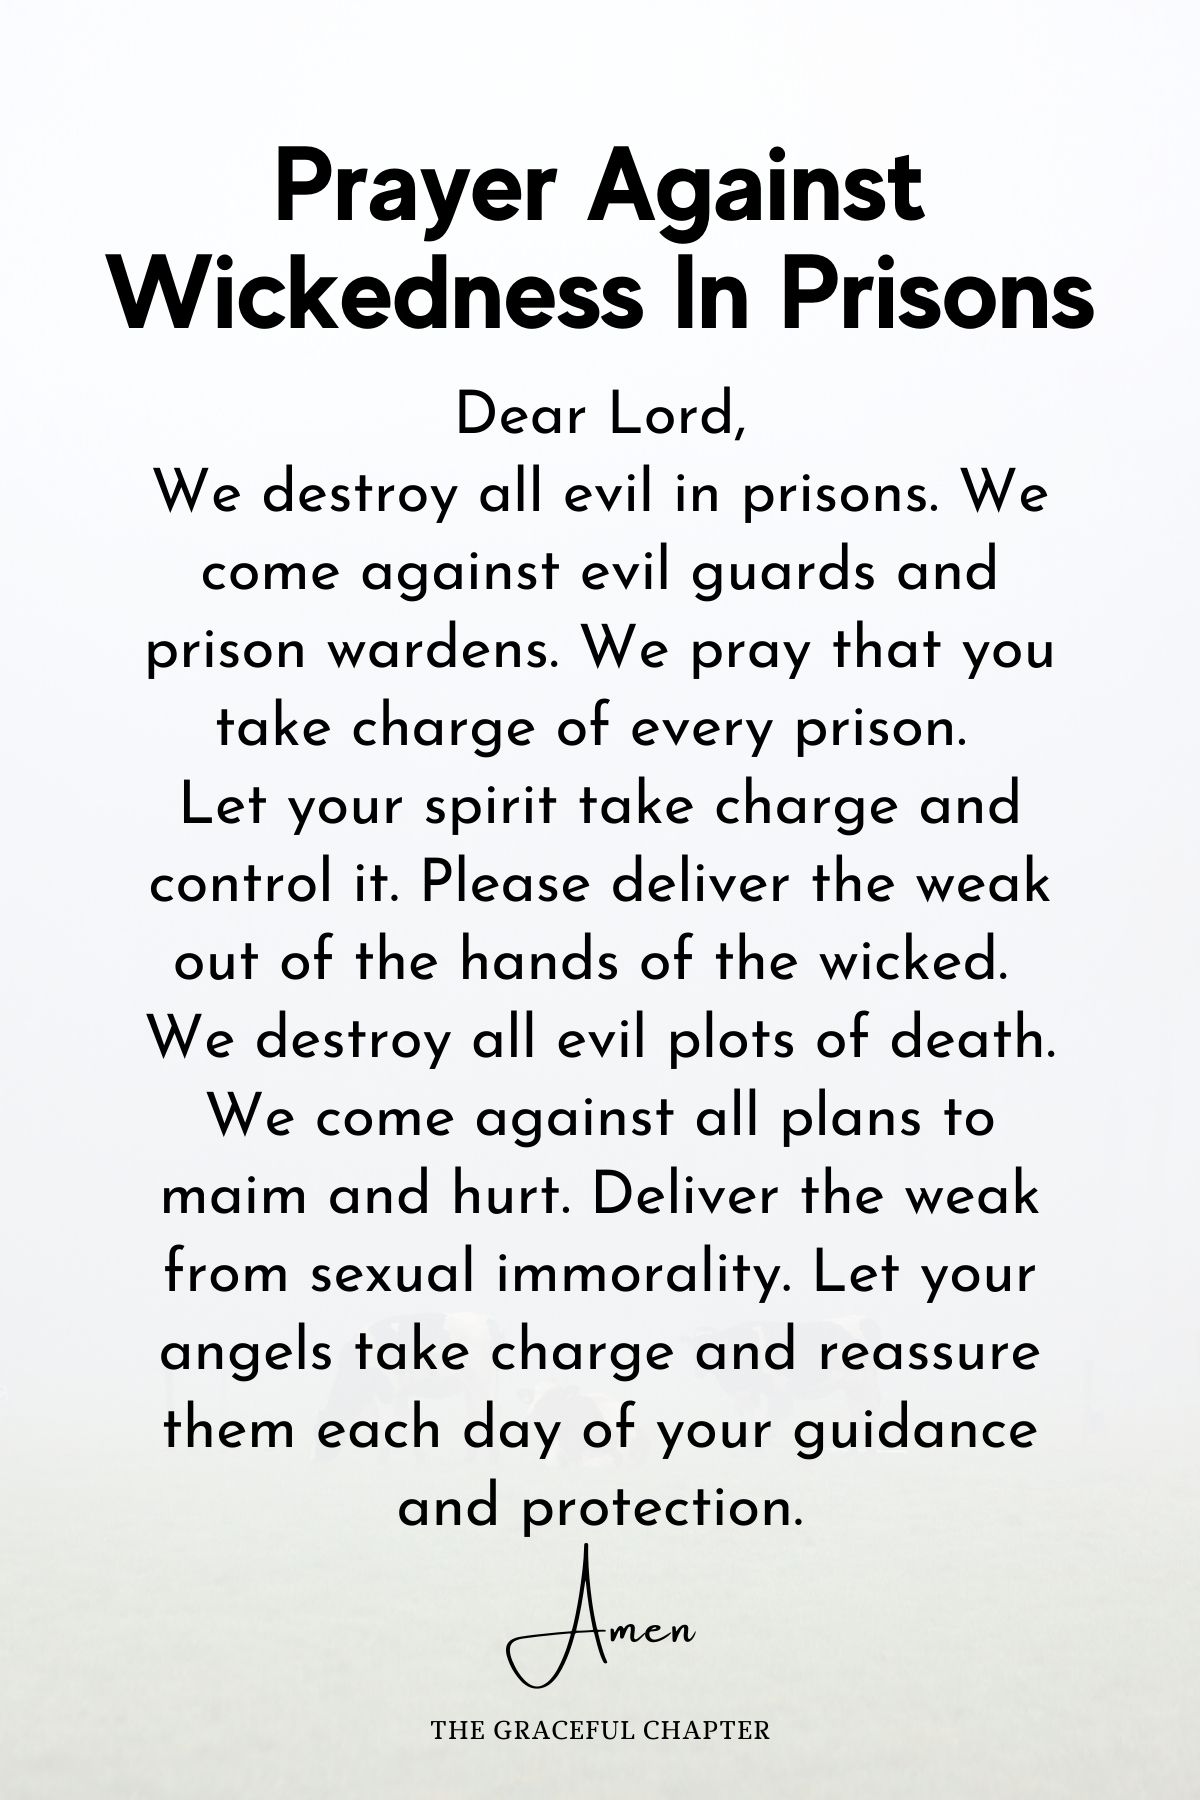 Prayer against wickedness in prisons